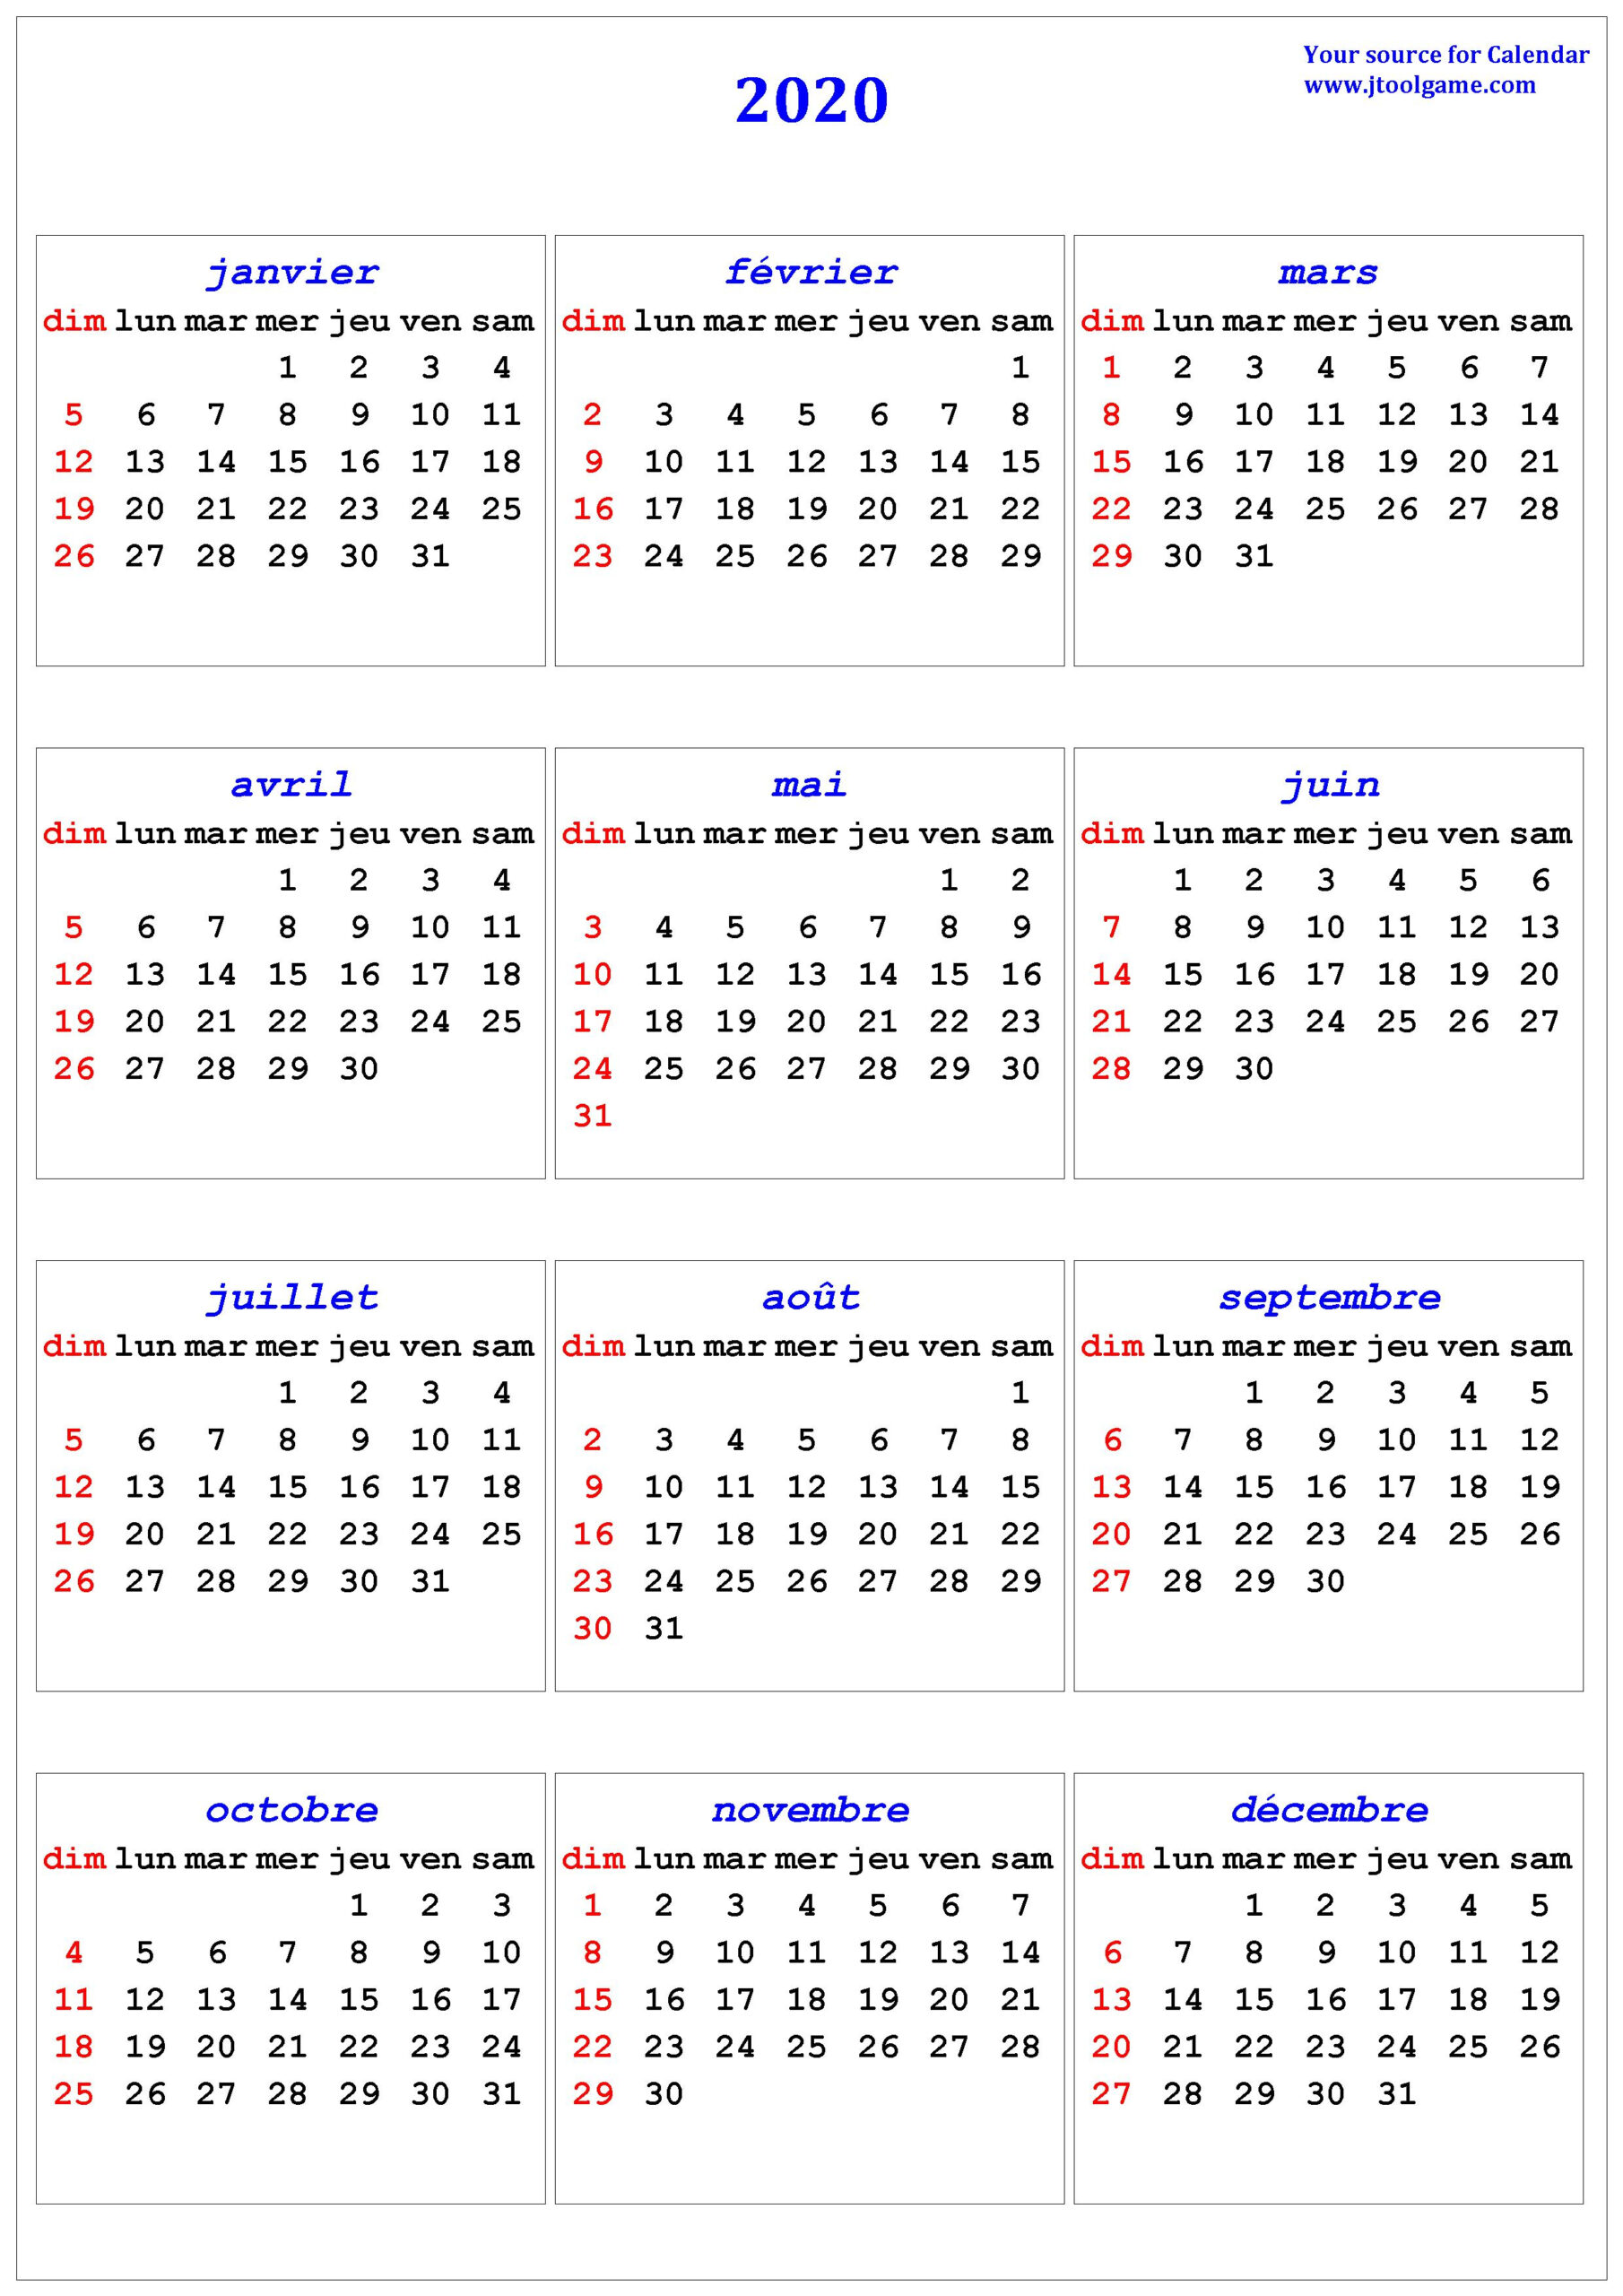 2020 Calendar - Printable Calendar. 2020 Calendar In